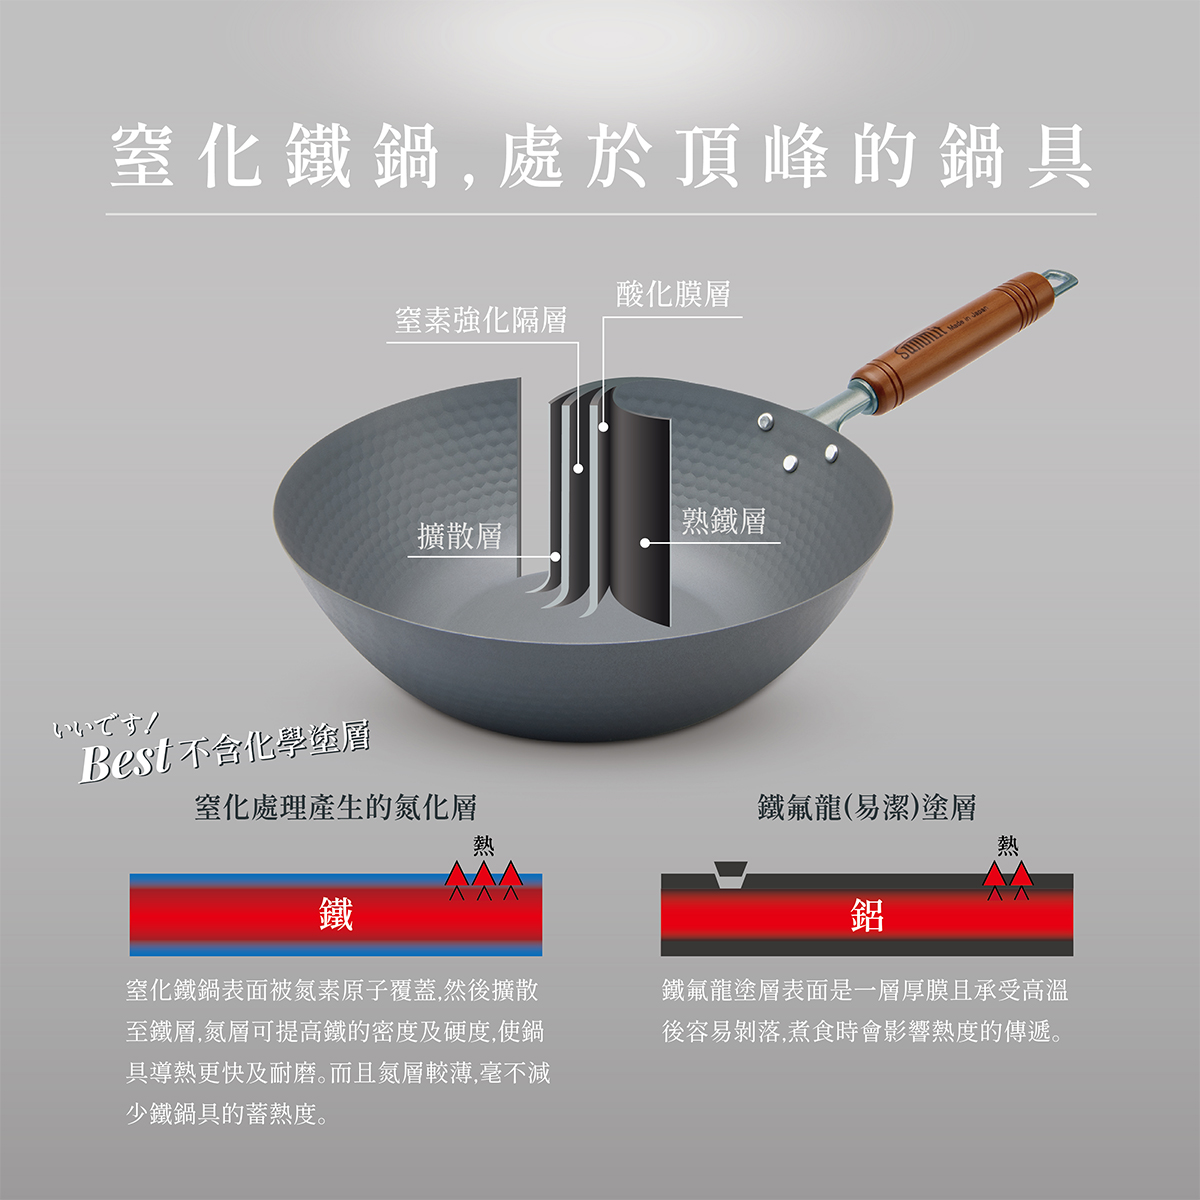 Comparison on summit wok